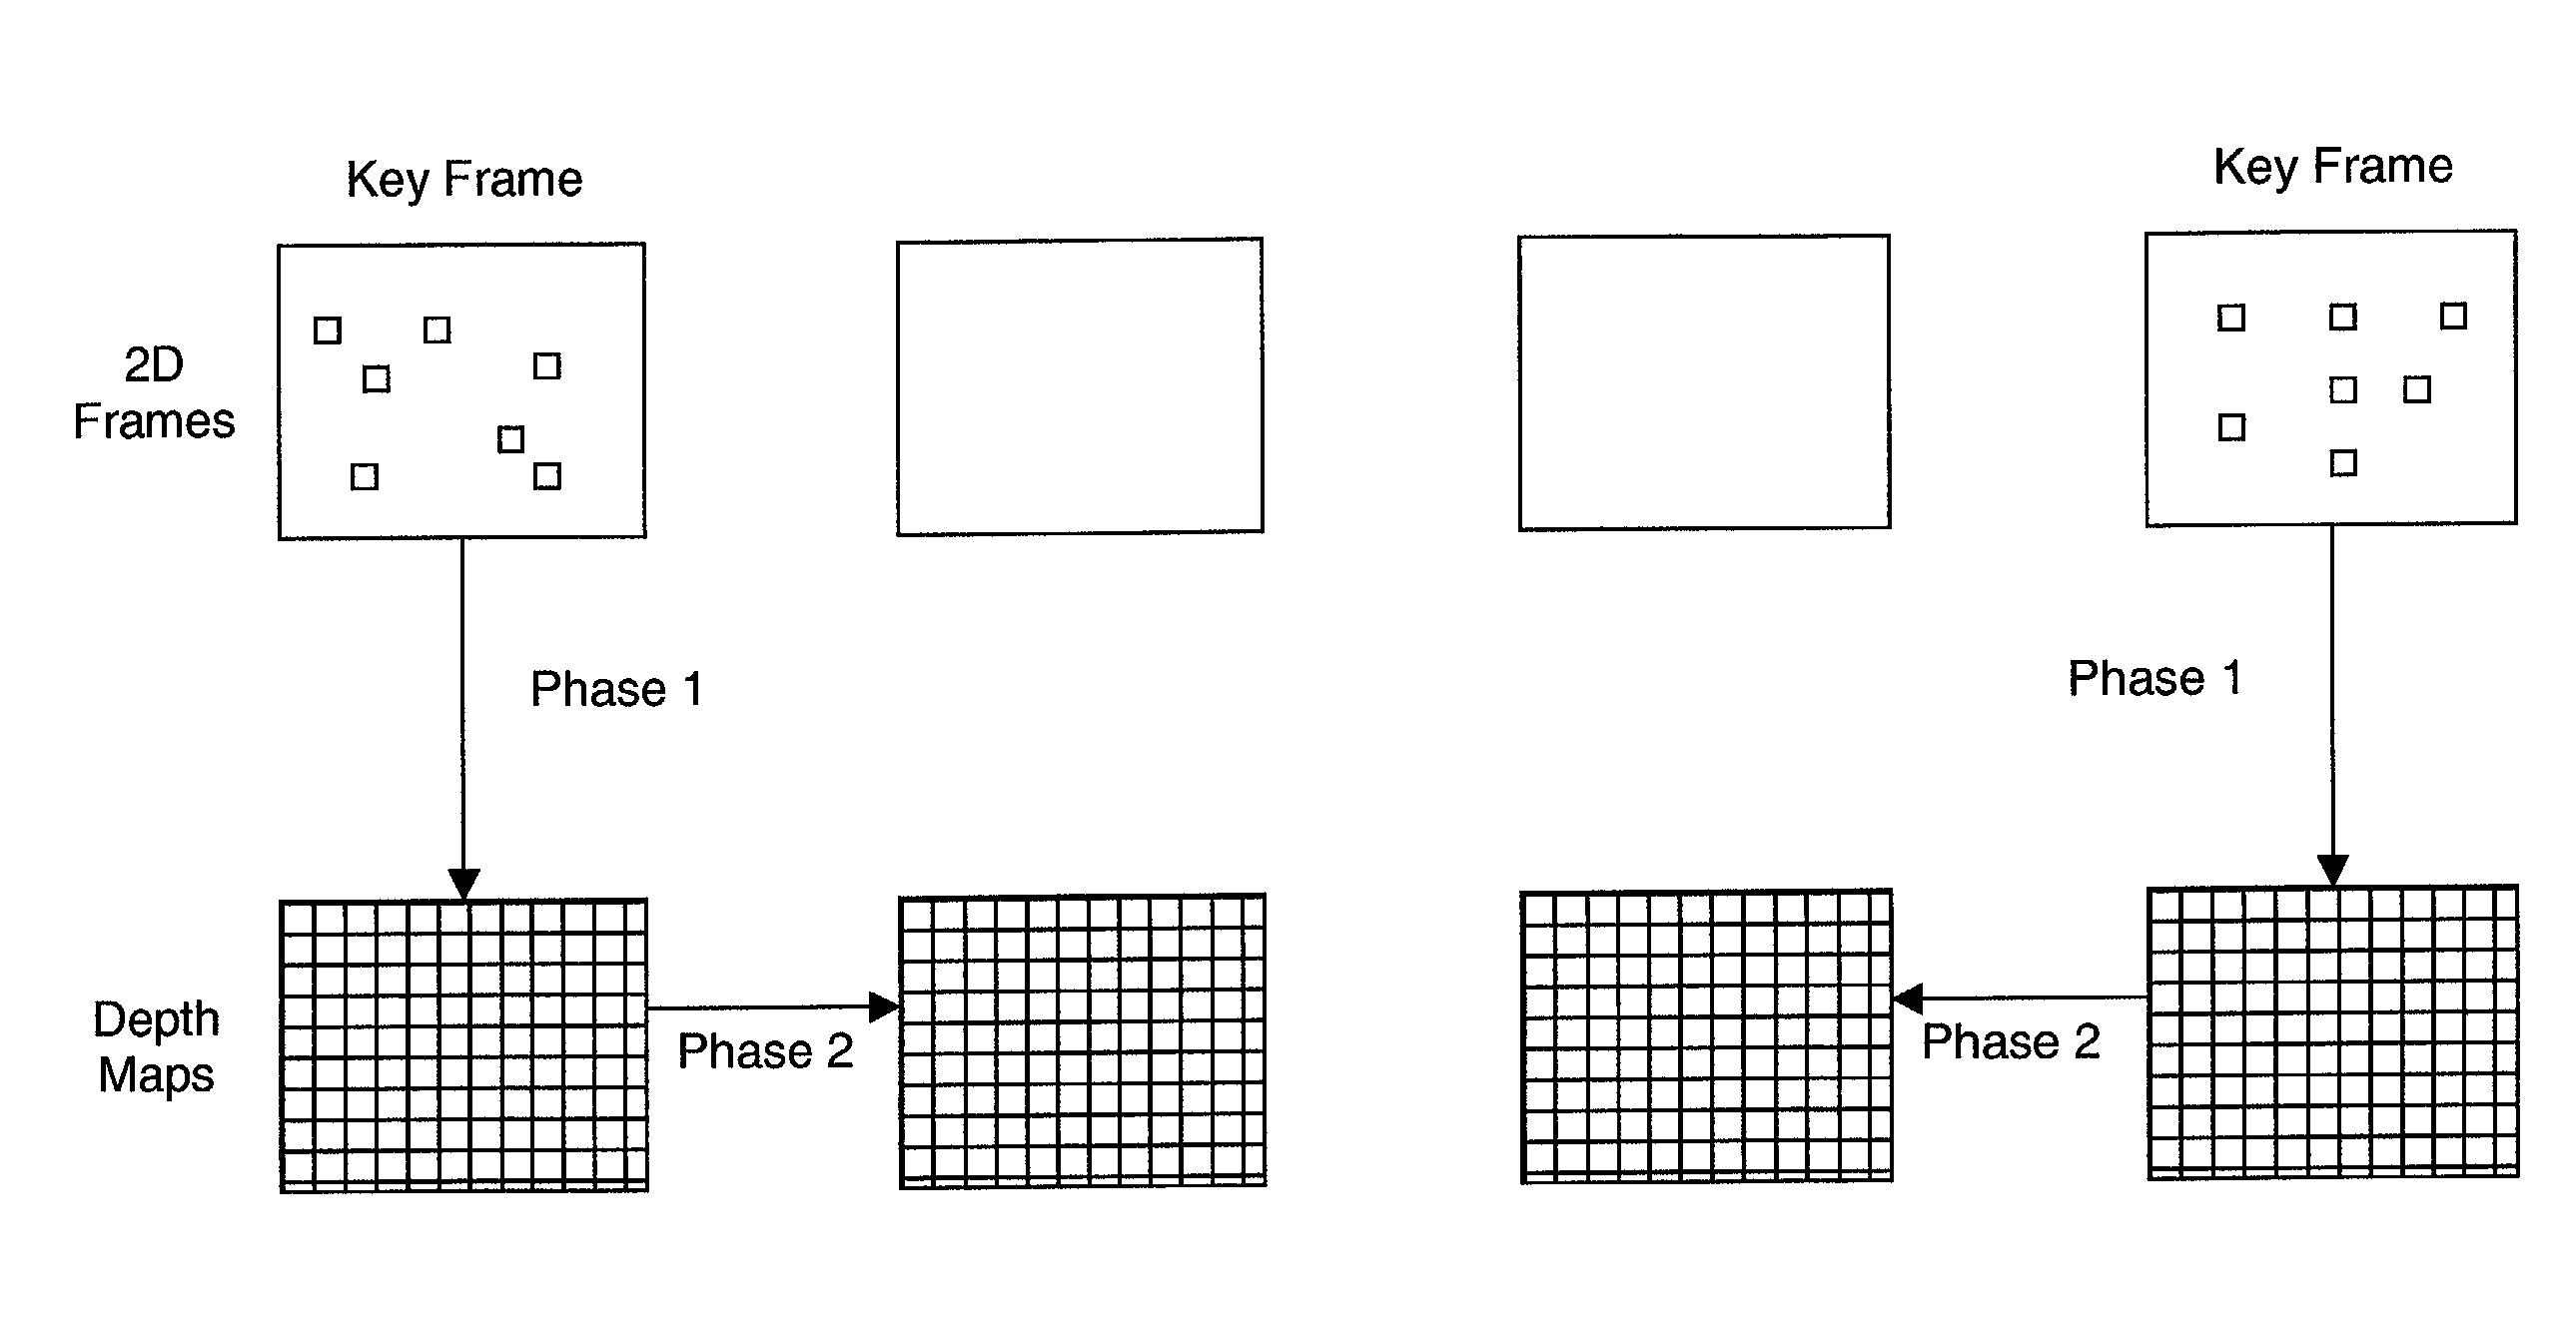 Conversion and encoding techniques